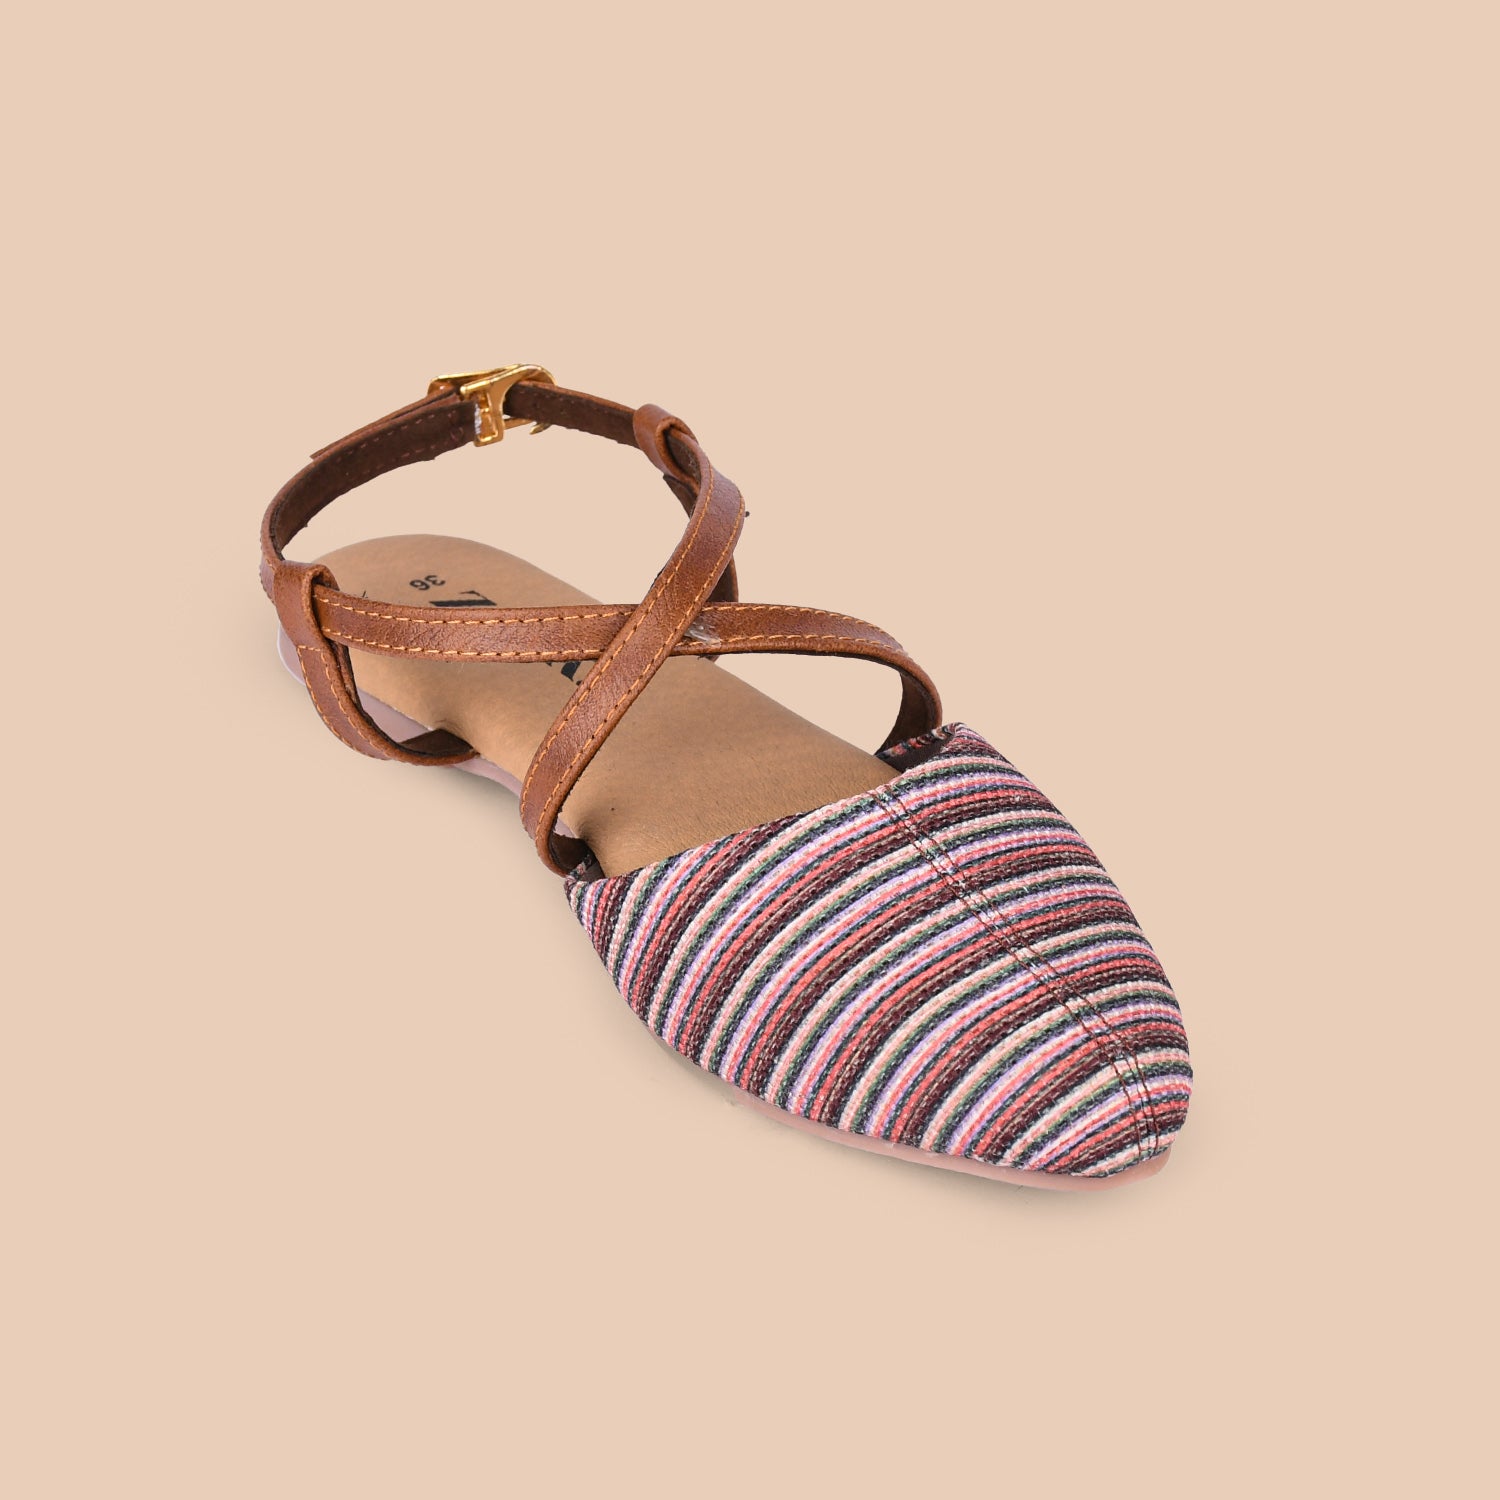 Rohtang Stripes Gladiator Sandals